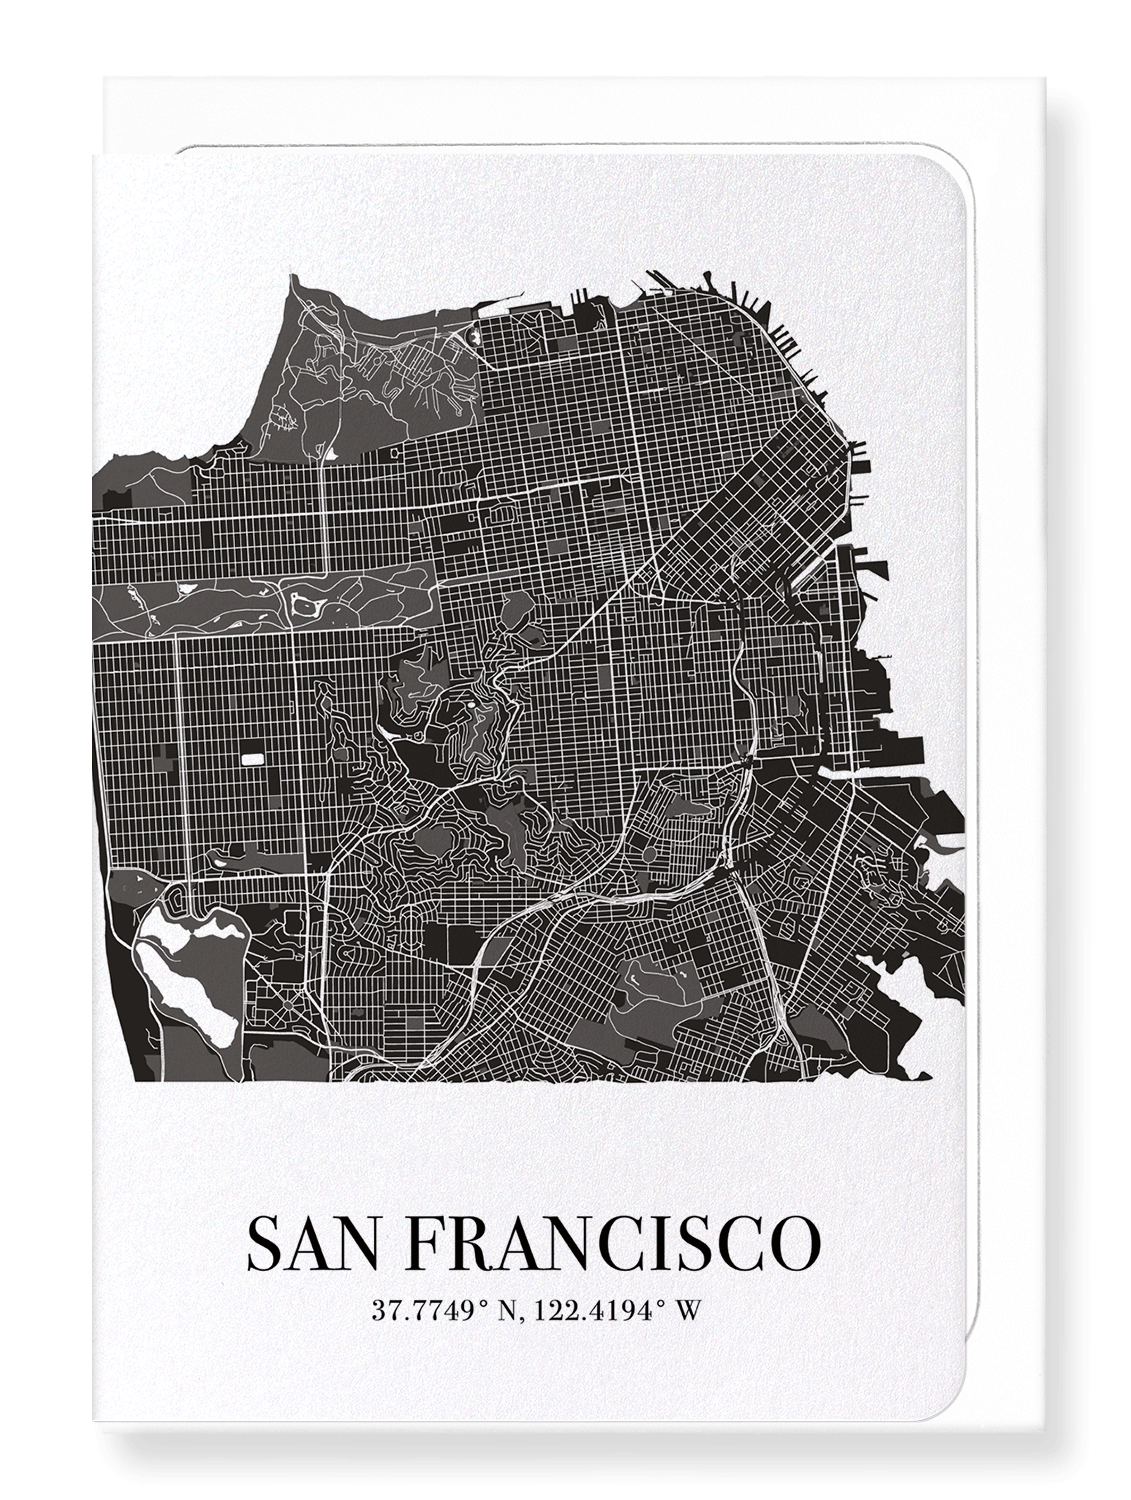 SAN FRANCISCO CUTOUT